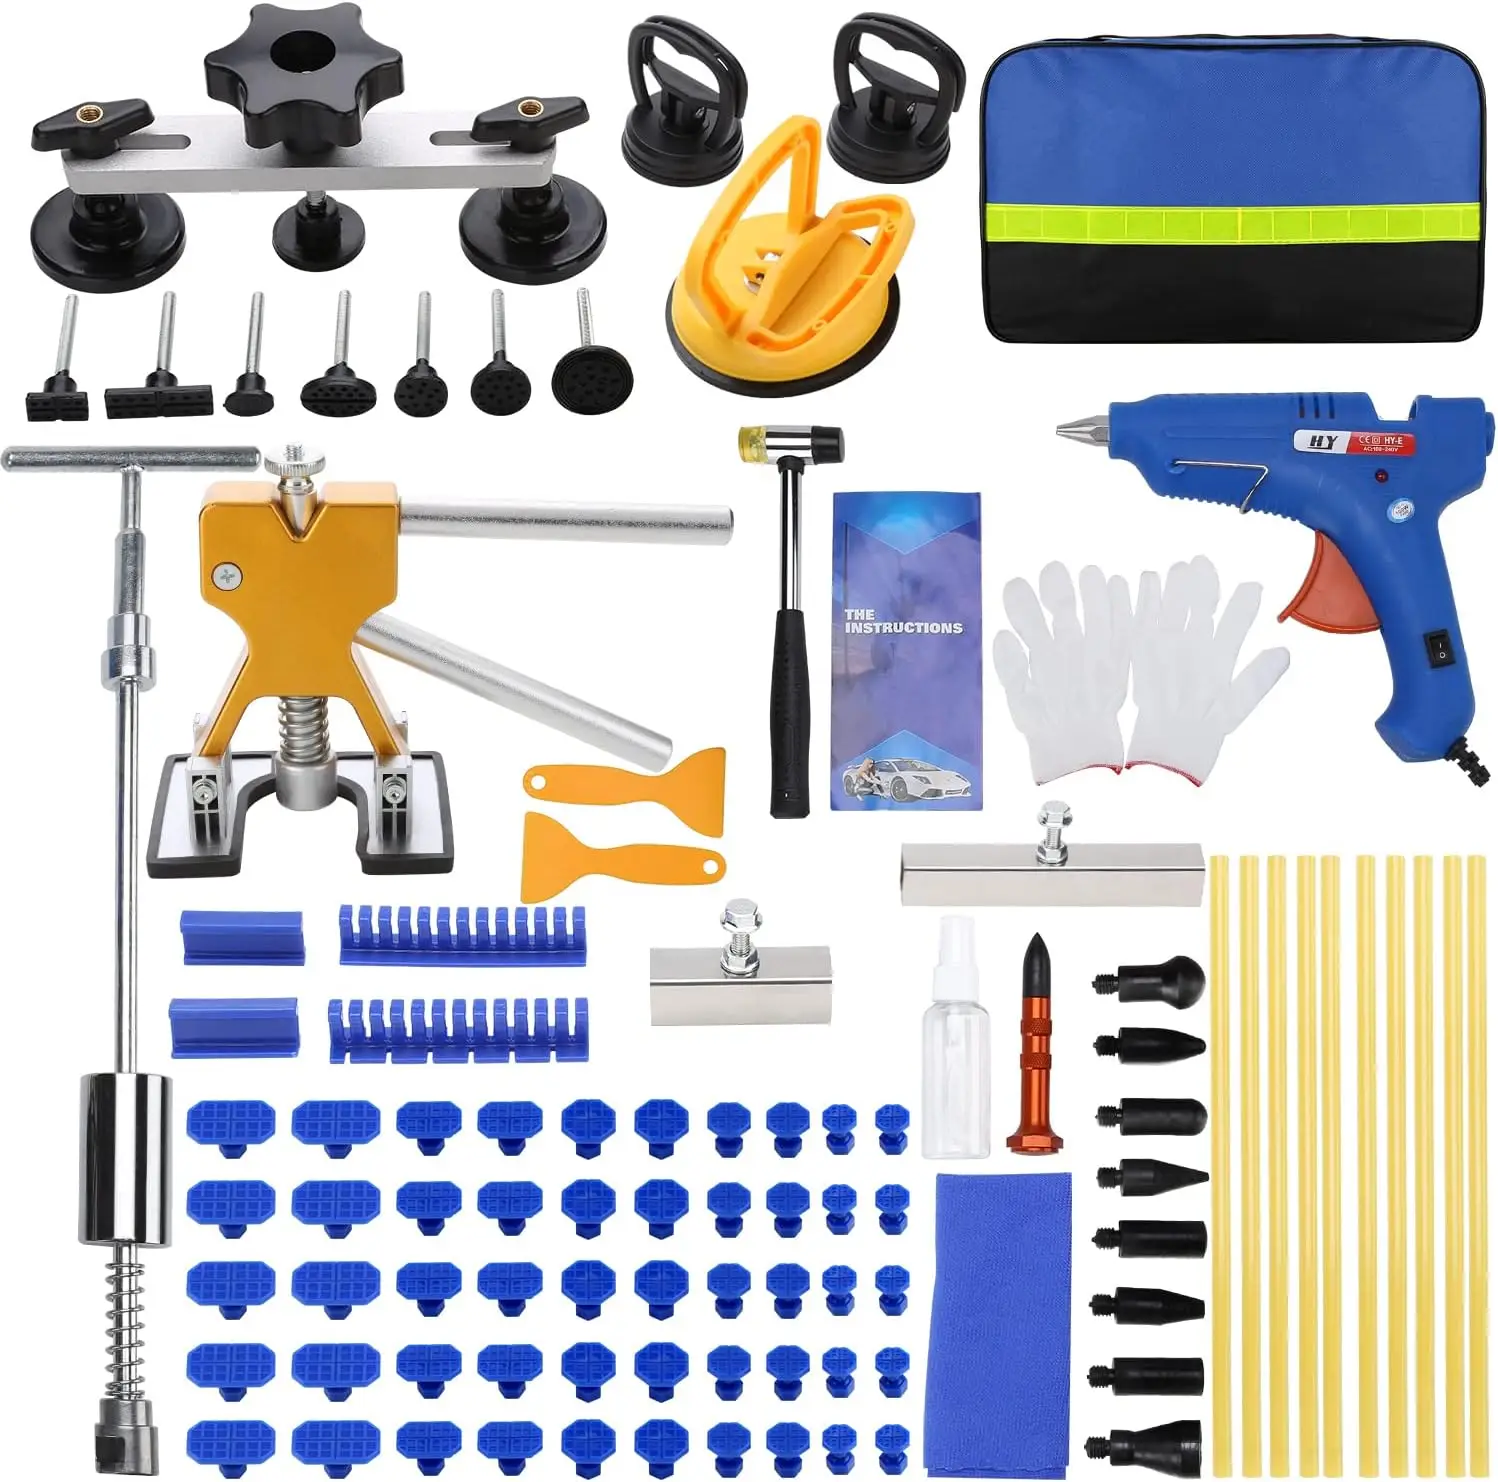 

Auto Body Dent Repair Tool Kit, Paintless Dent Repair Kit with Golden Lifter, Slide Hammer T-bar Dent Puller, Bridge Puller, Suc